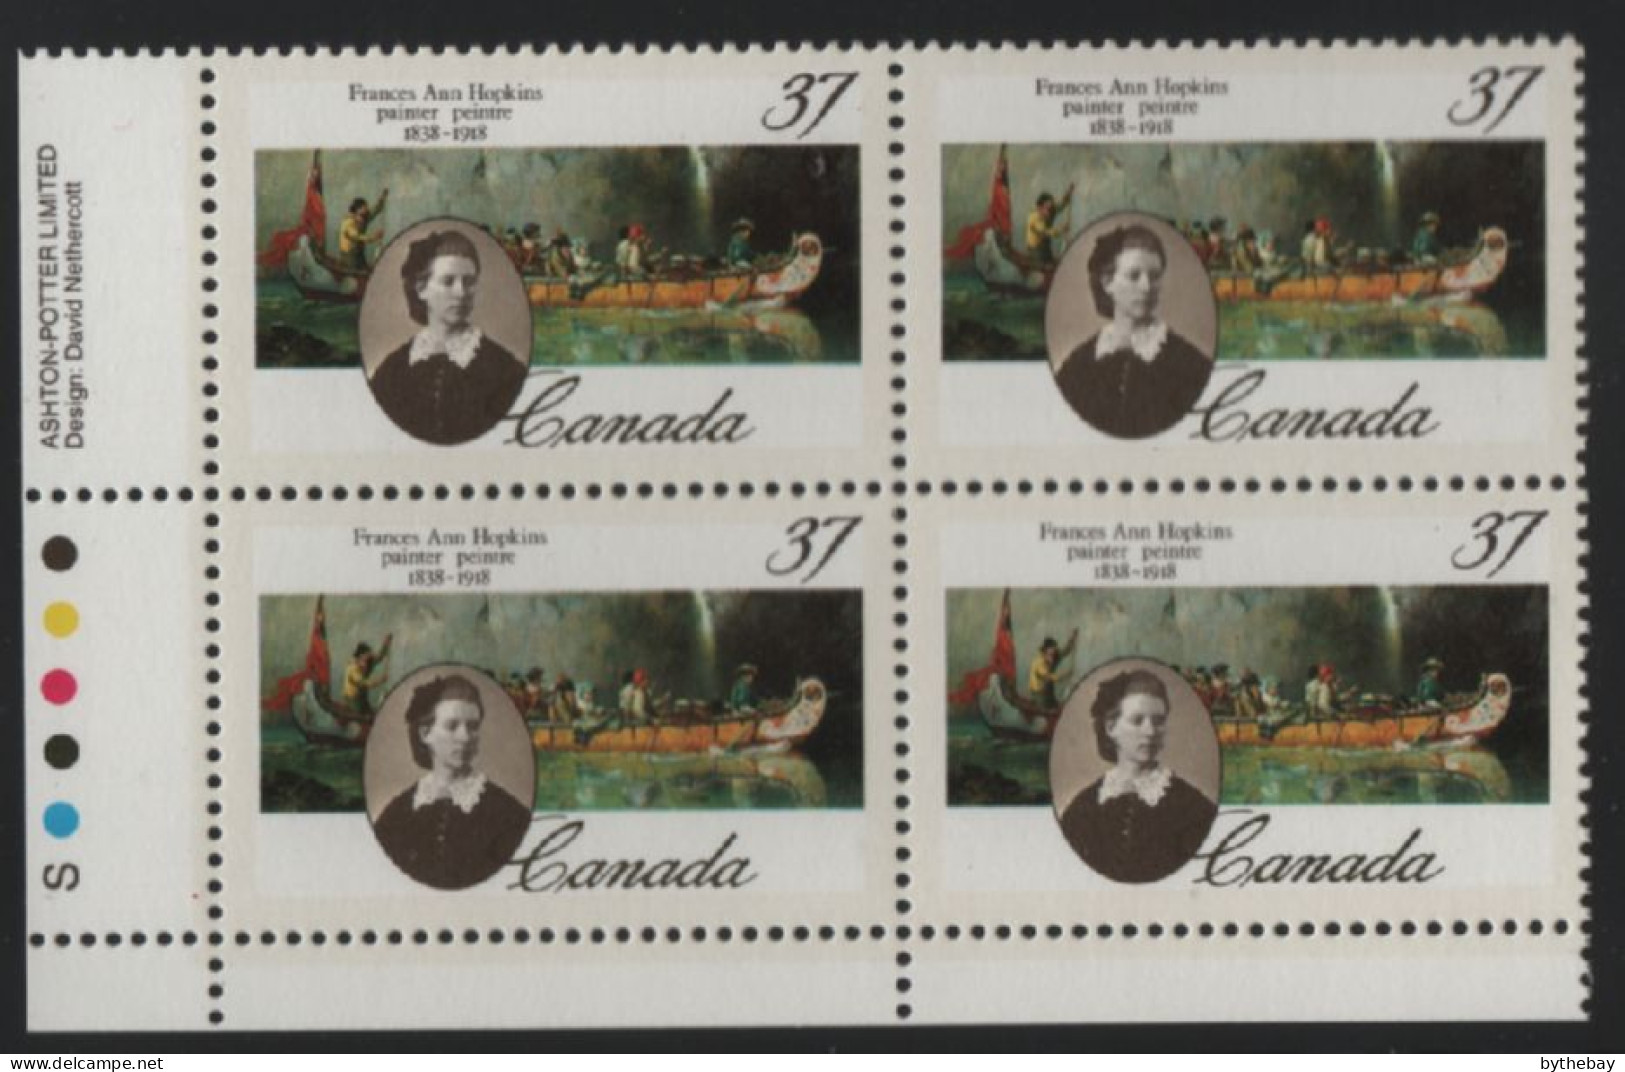 Canada 1988 MNH Sc 1227 37c Frances Ann Hopkins LL Plate Block - Plate Number & Inscriptions